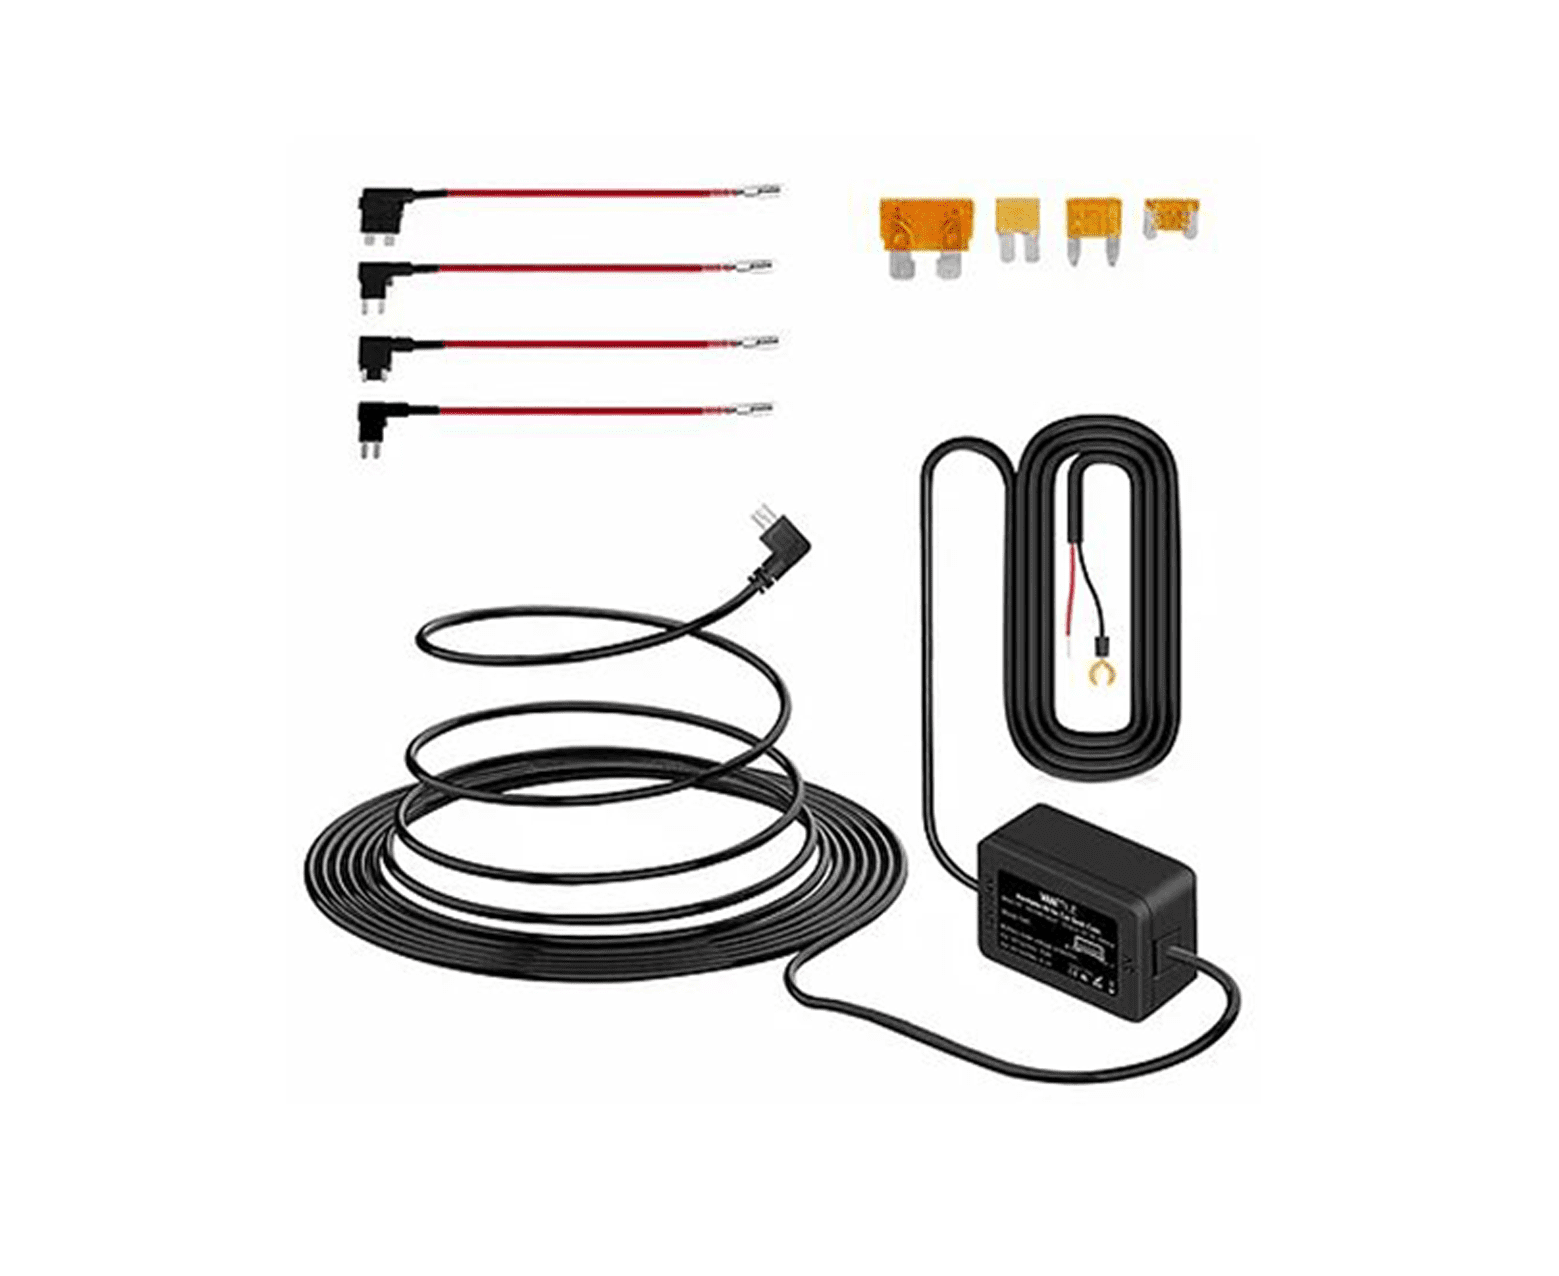 Vantrue Hardwire Kit (Power Cable)